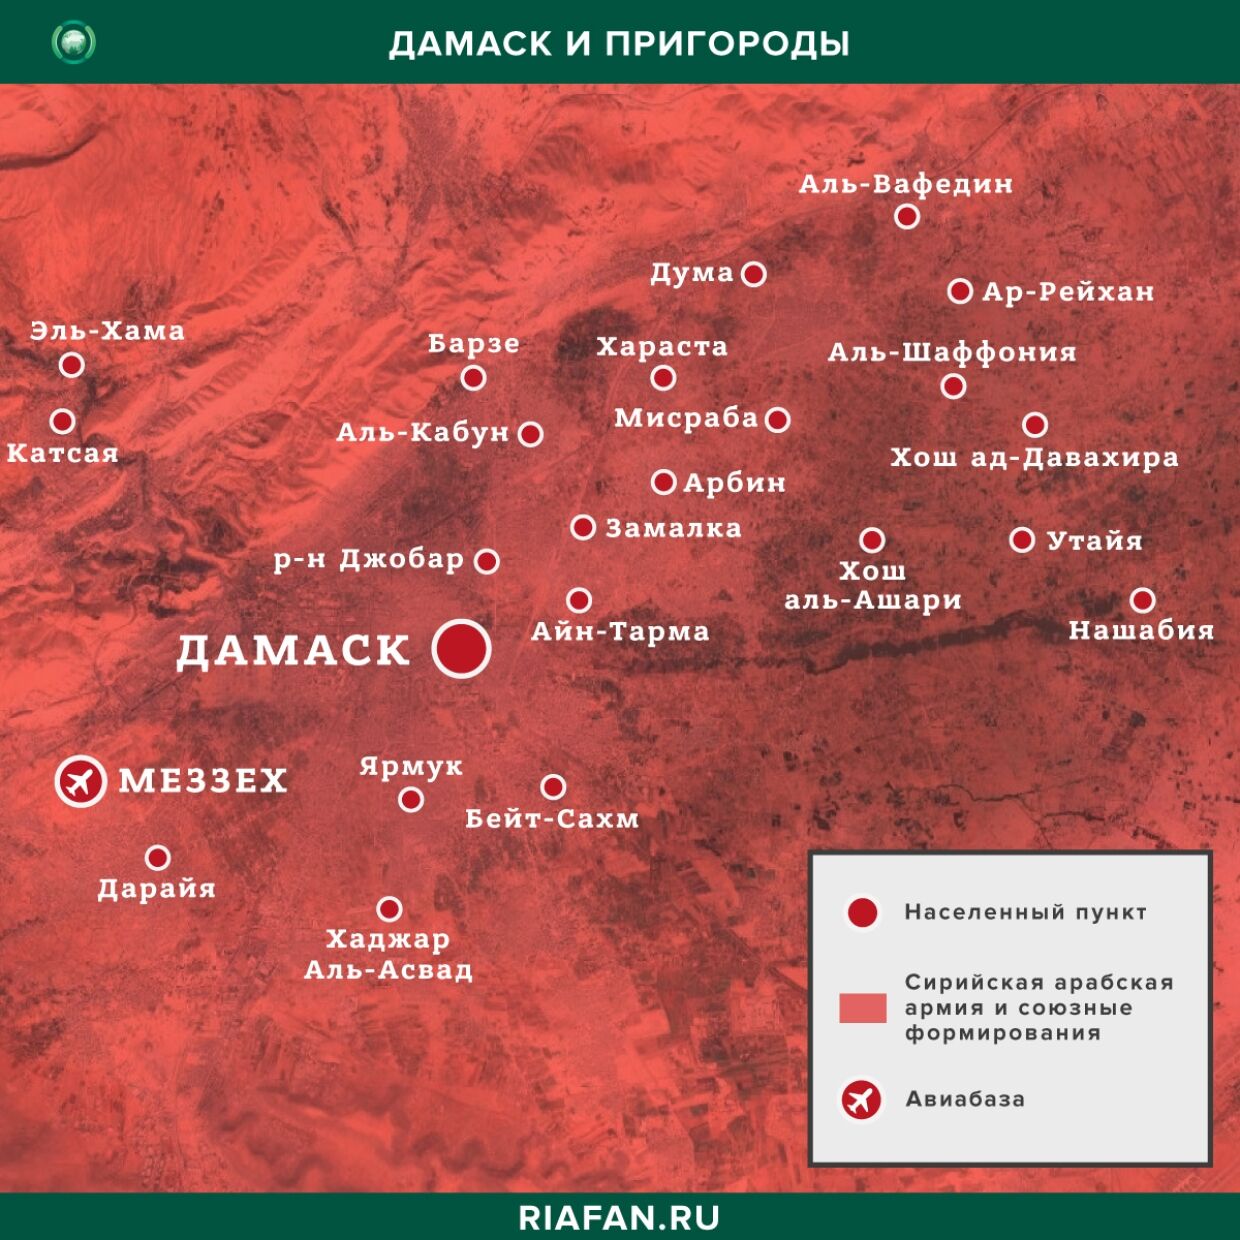 叙利亚每日结果 28 四月 06.00: двое солдат США пропали в Дейр-эз-Зоре, семь жителей Дамаска пострадали при авиаударе ВВС Израля